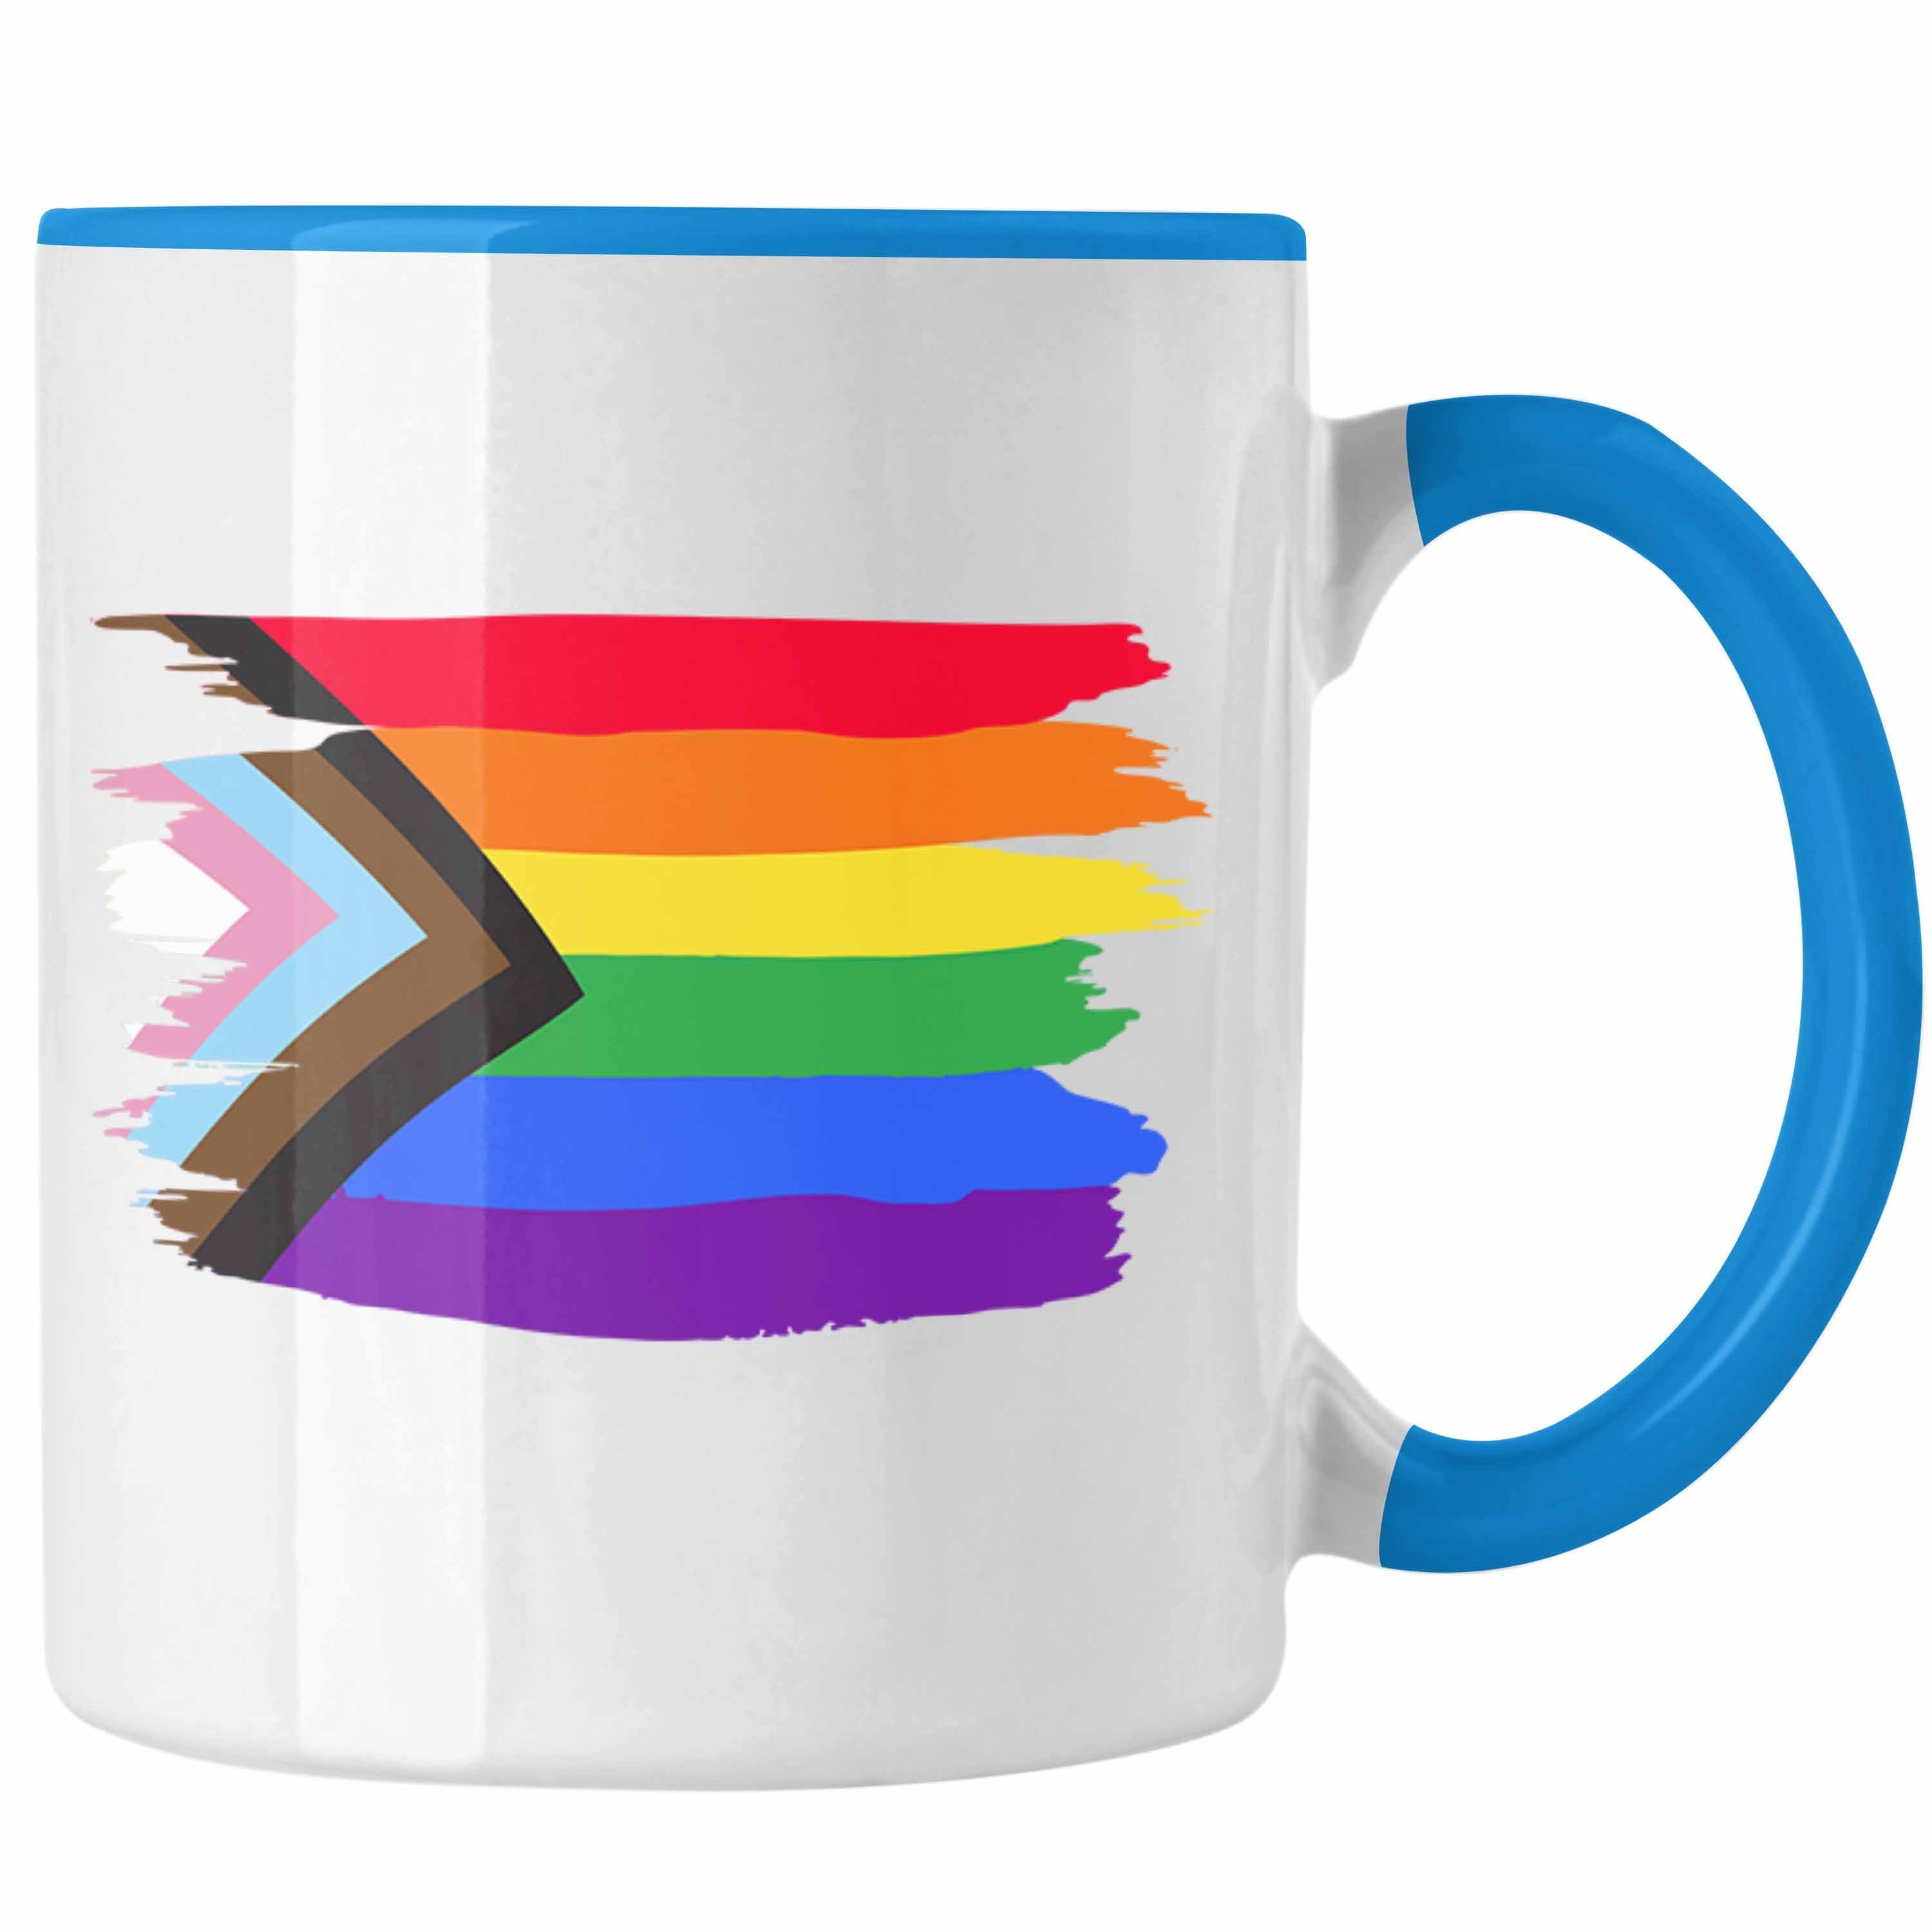 Trendation Tasse Trendation - Regenbogen Tasse Geschenk LGBT Schwule Lesben Transgender Grafik Pride Flagge Blau